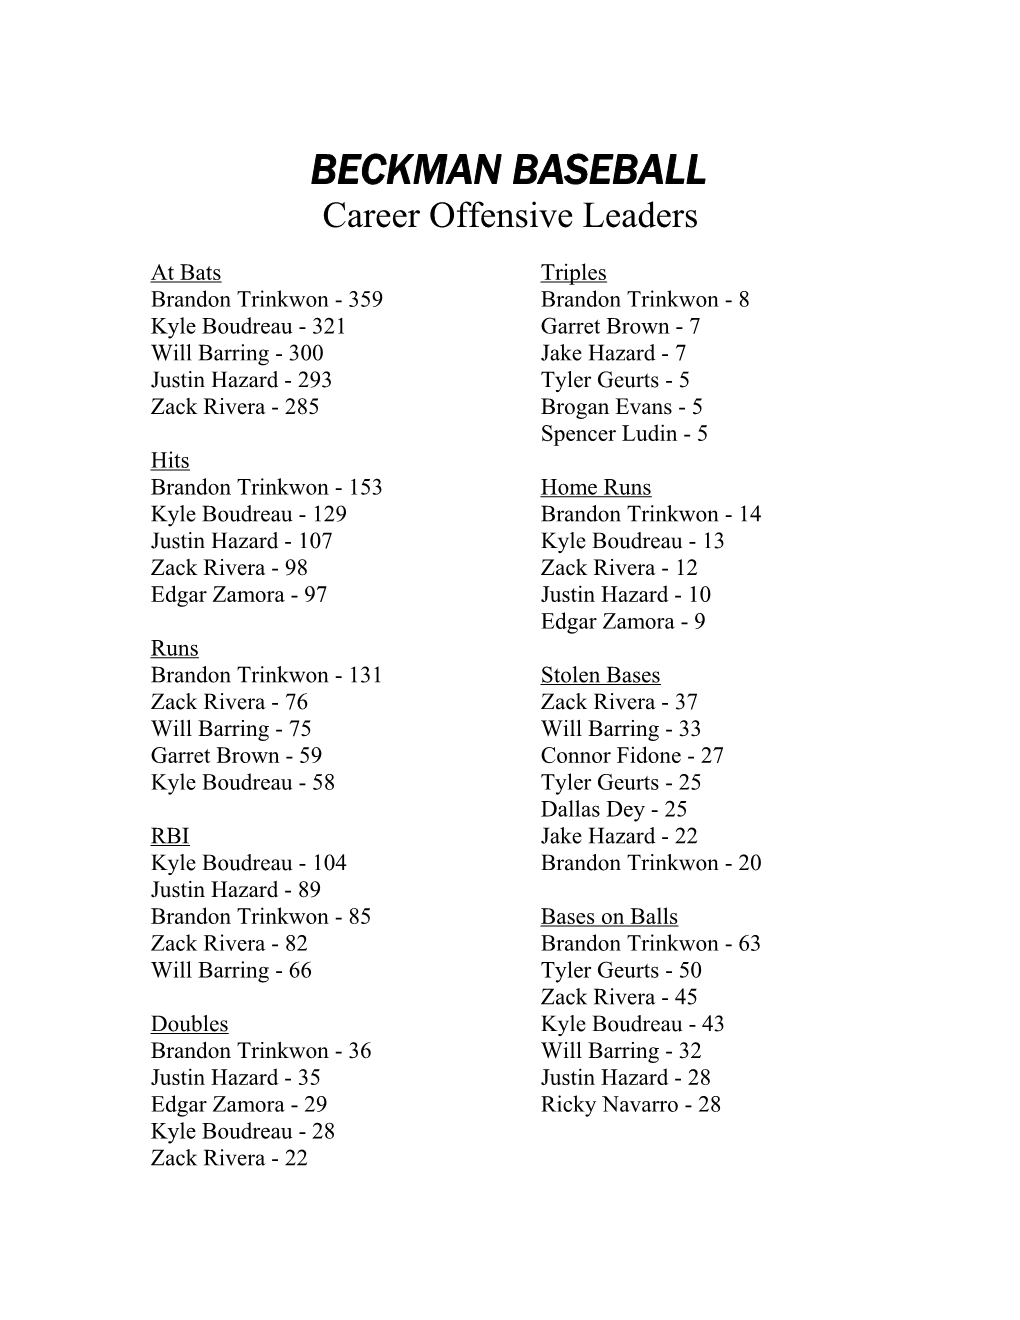 Beckman Baseball